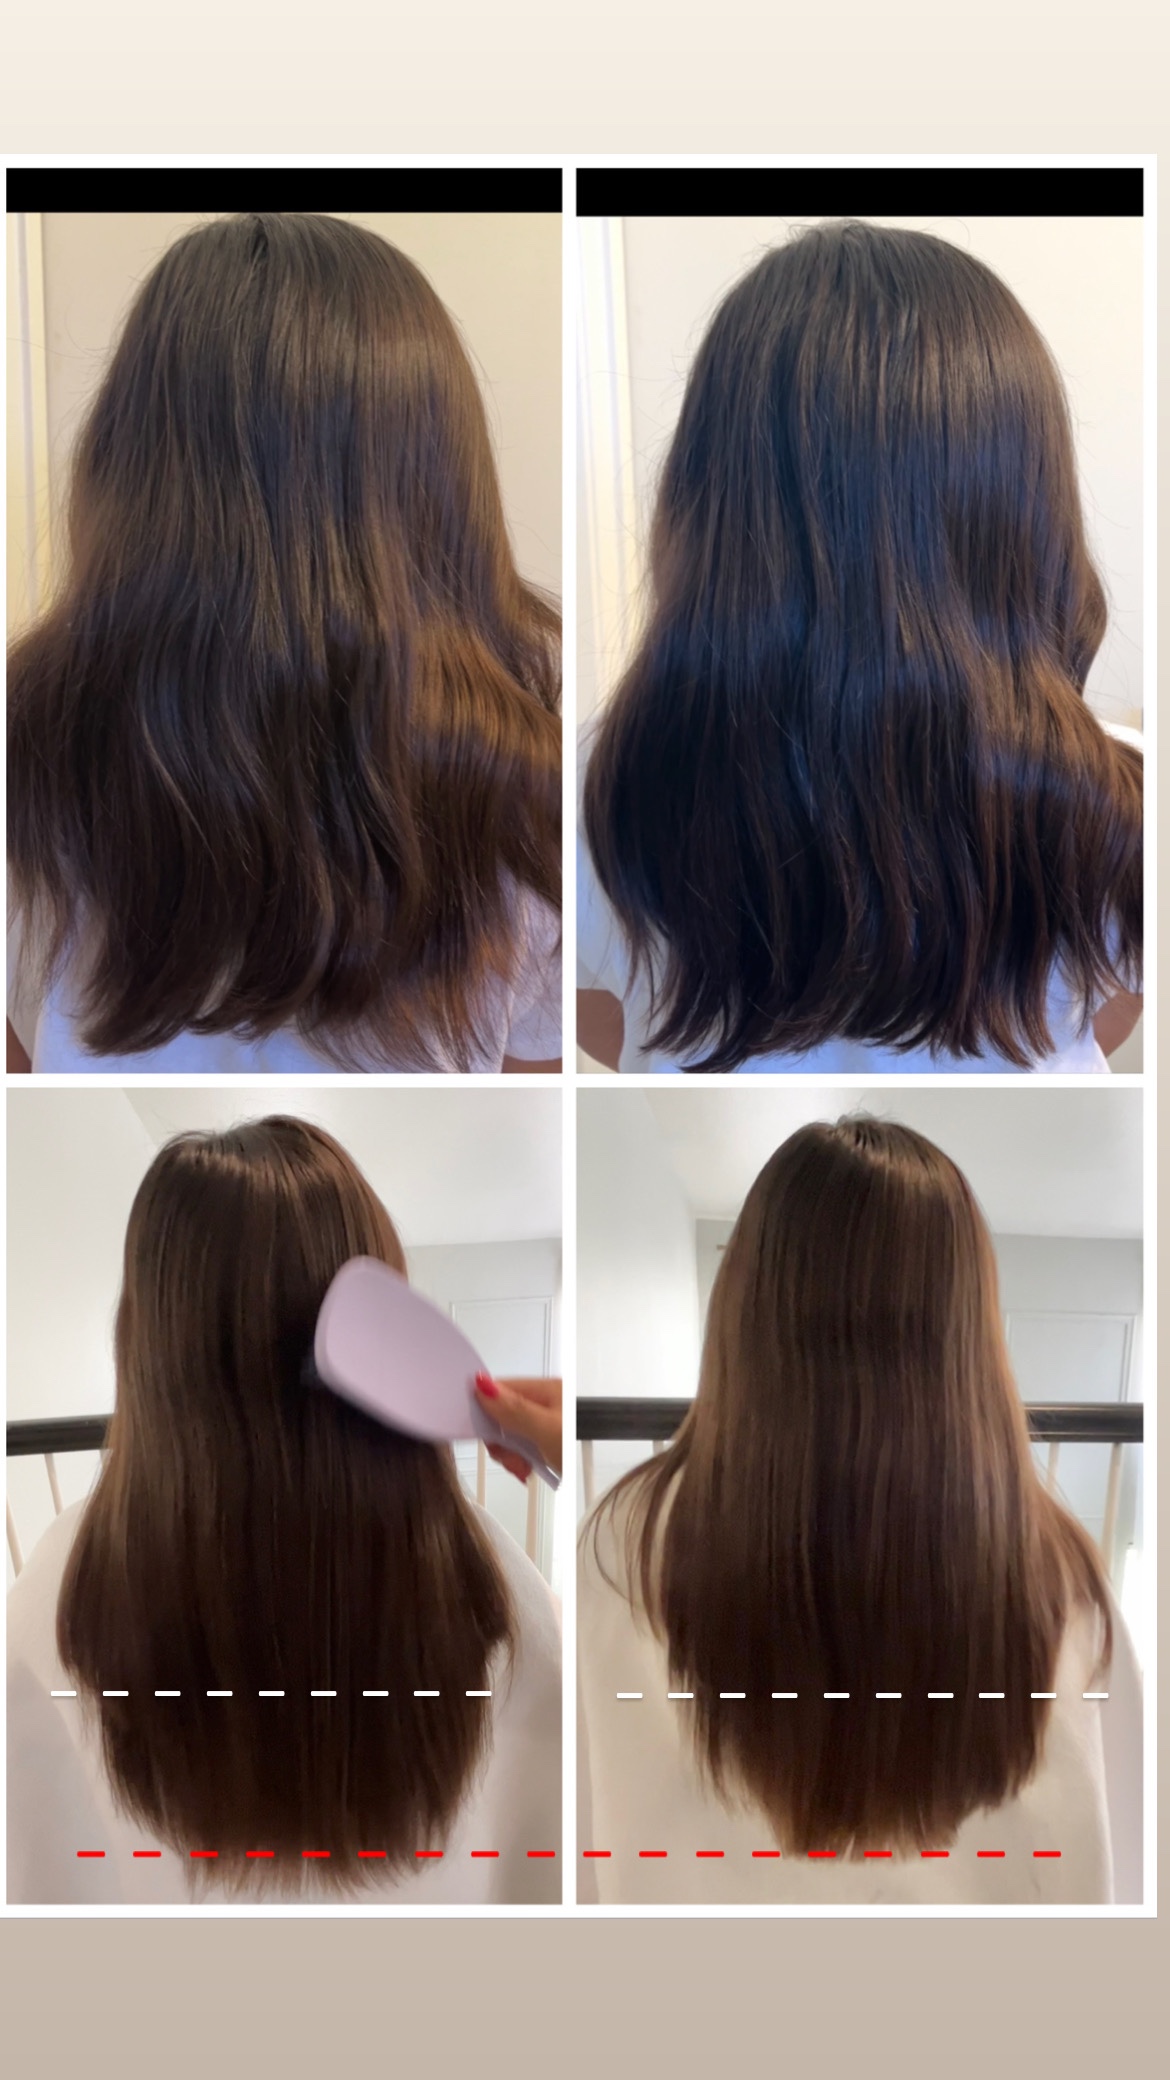 6 month hair growth progress